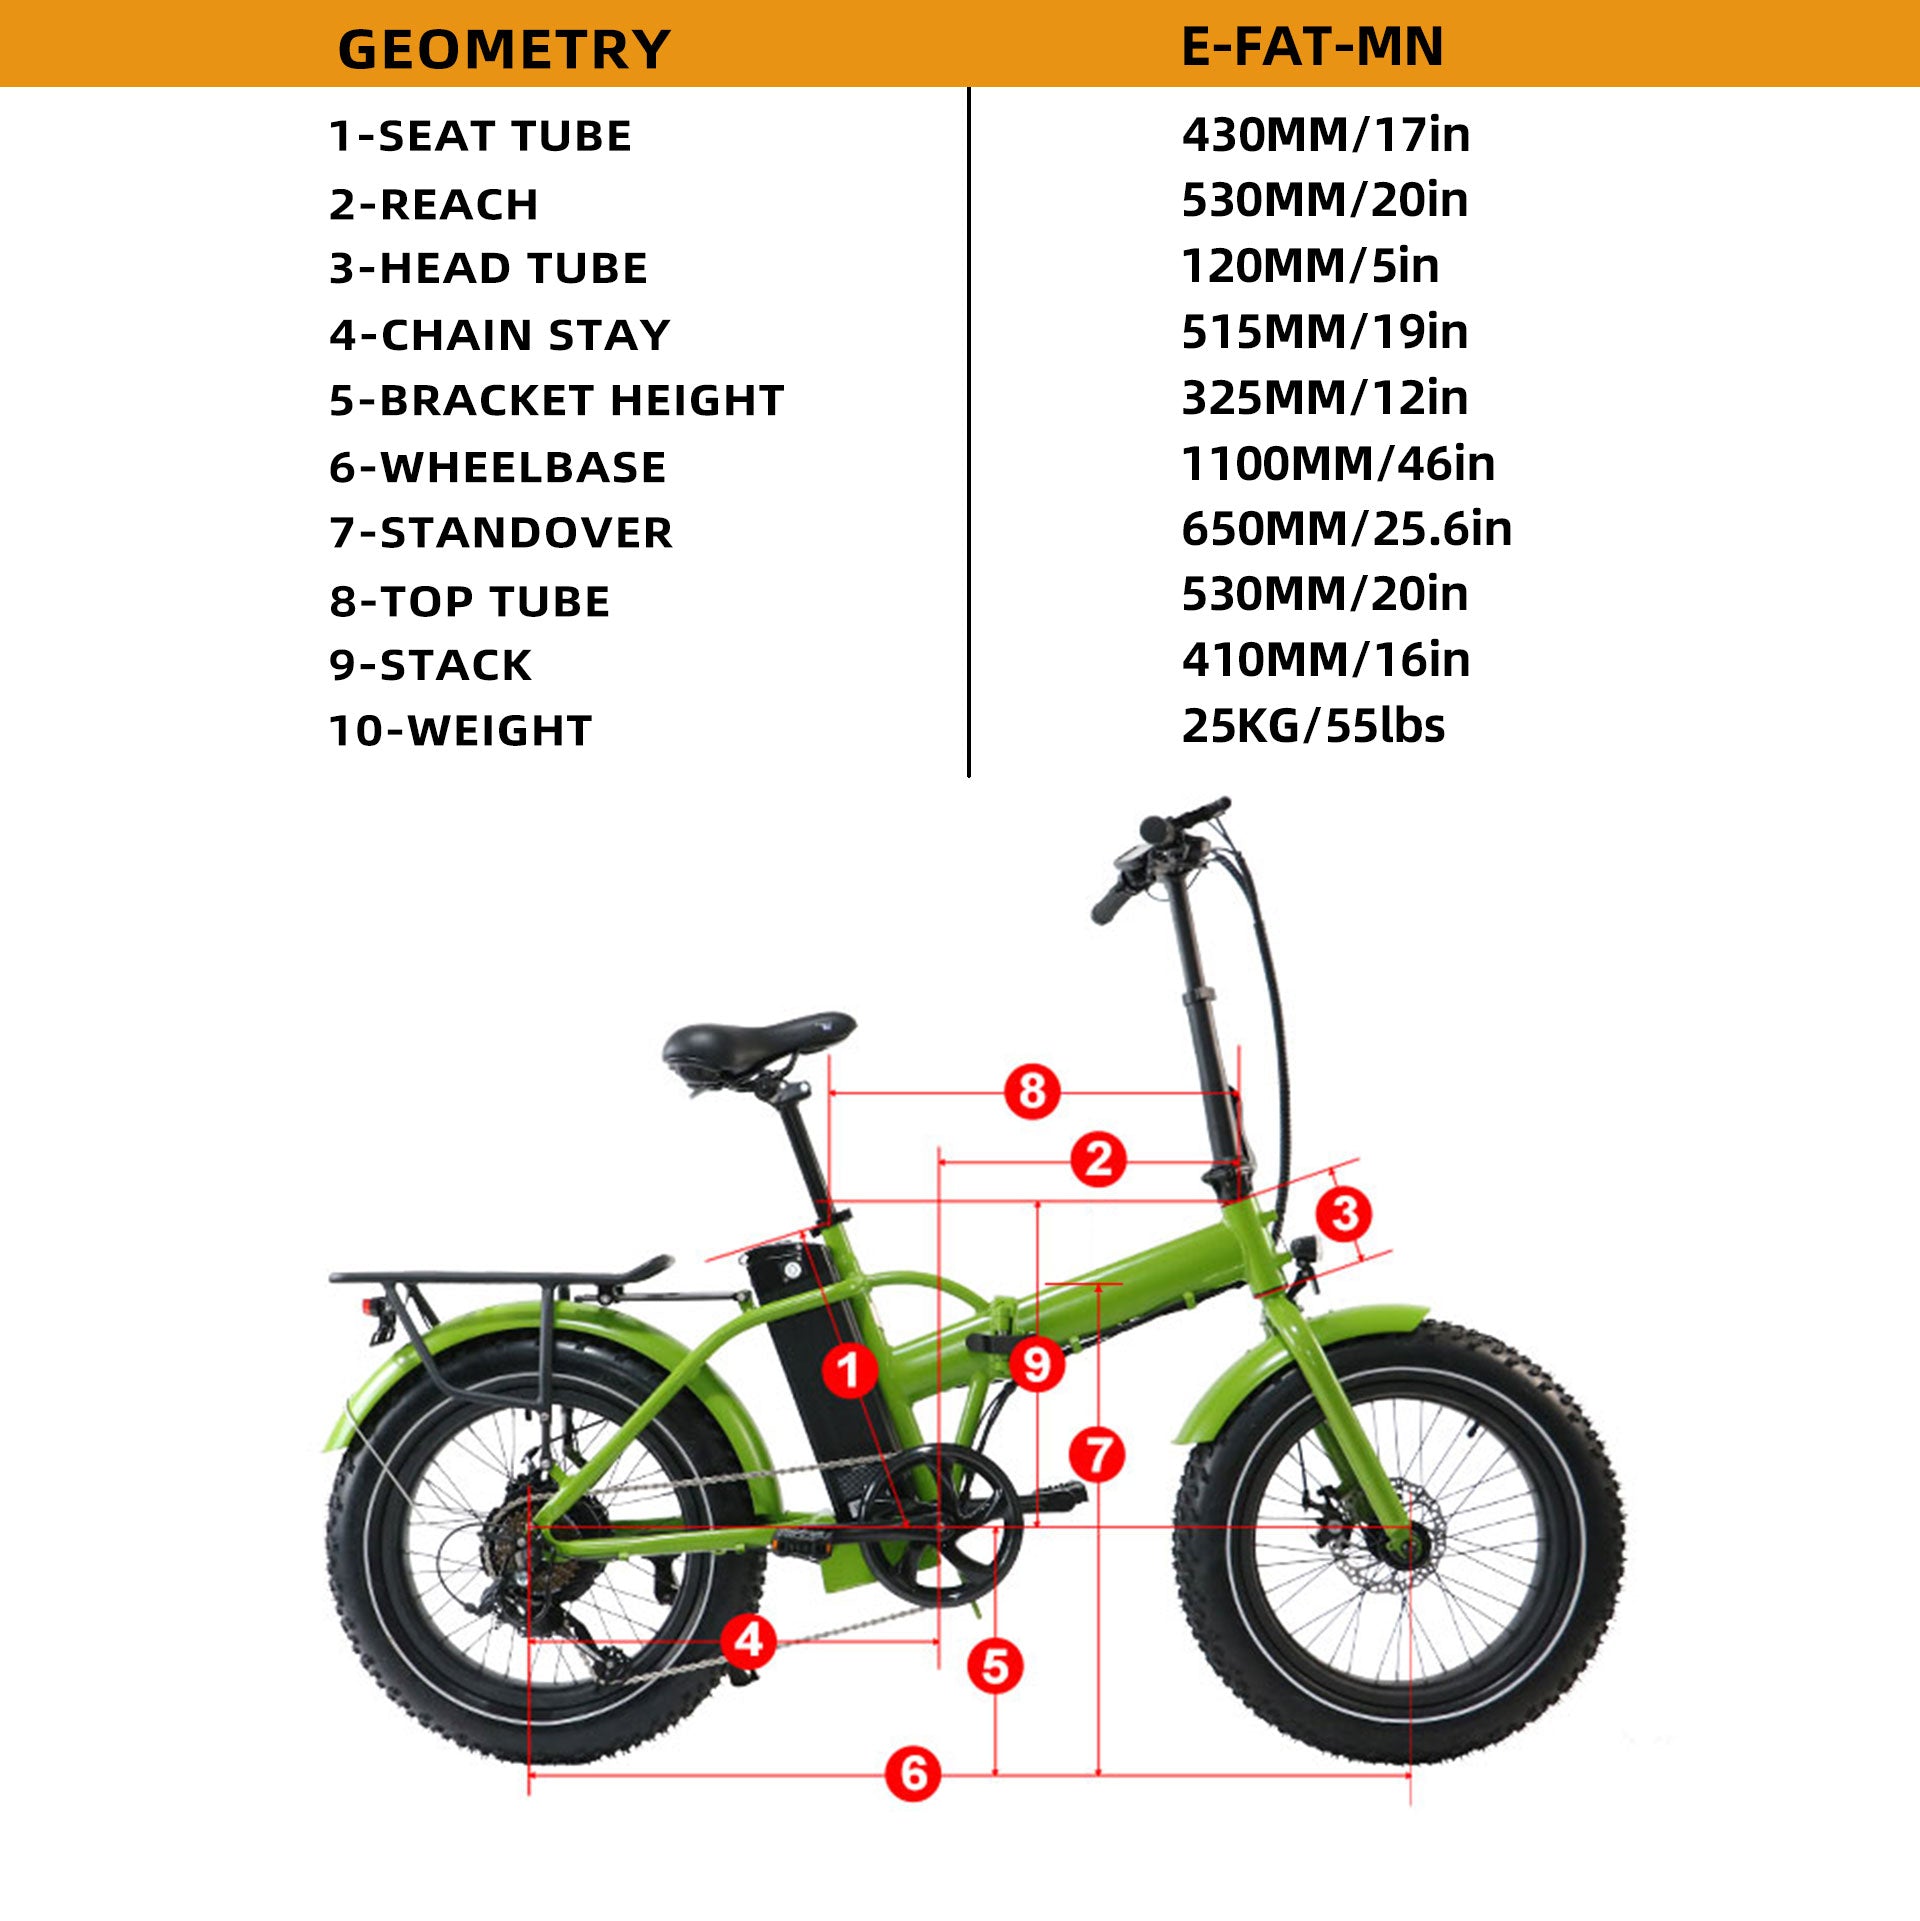 Moped style E-bike Eunorau E-Fat-MN Geometry